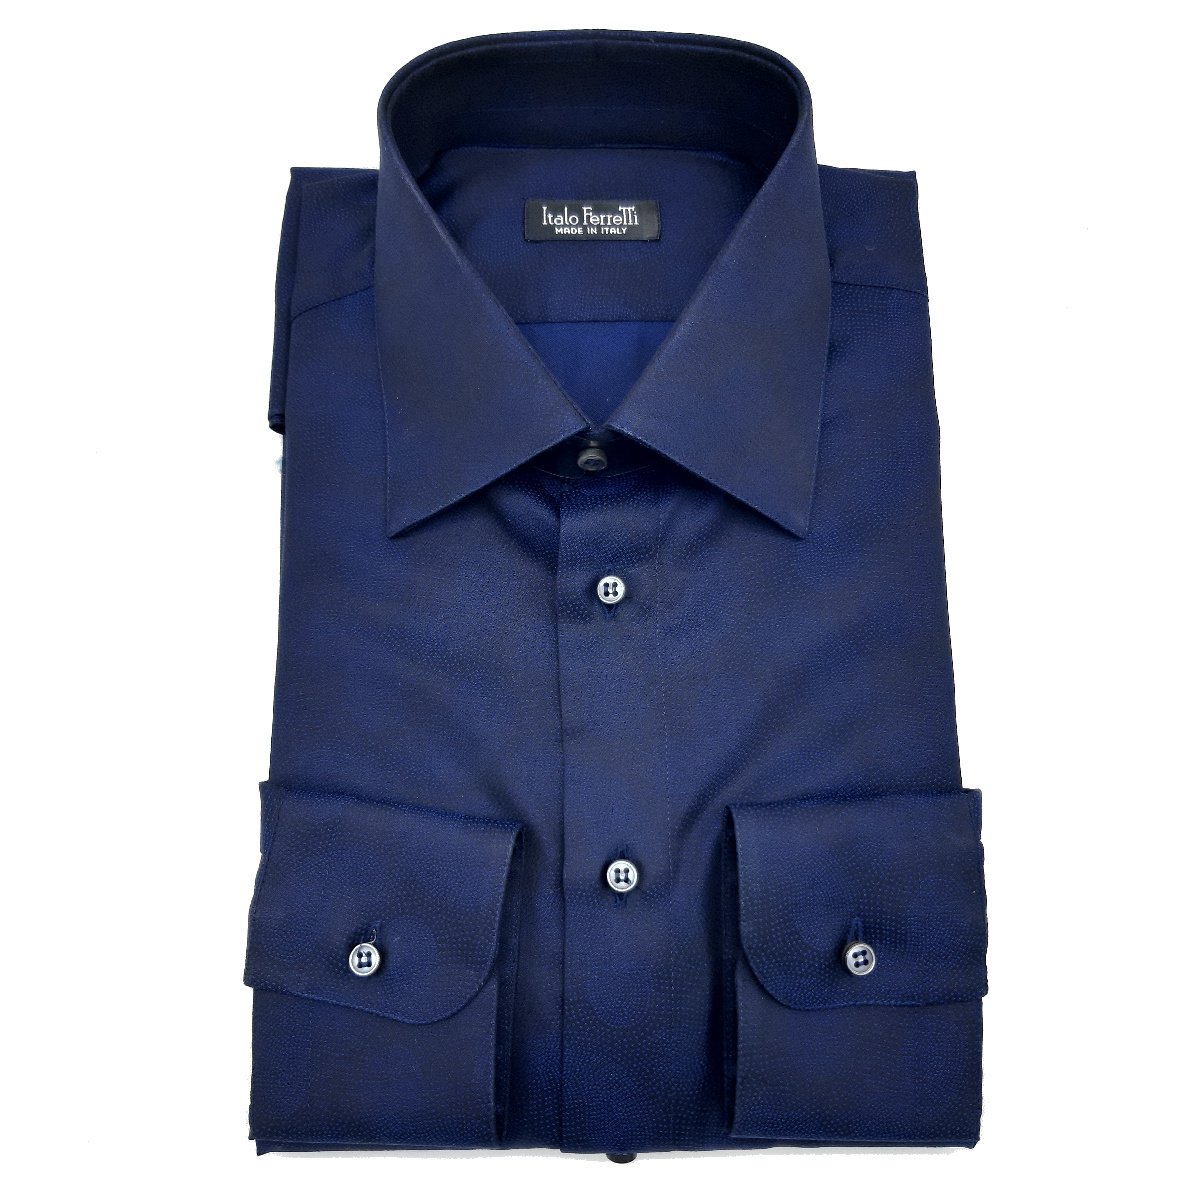 Cotton Long-Sleeved Shirt - Luxury Blue